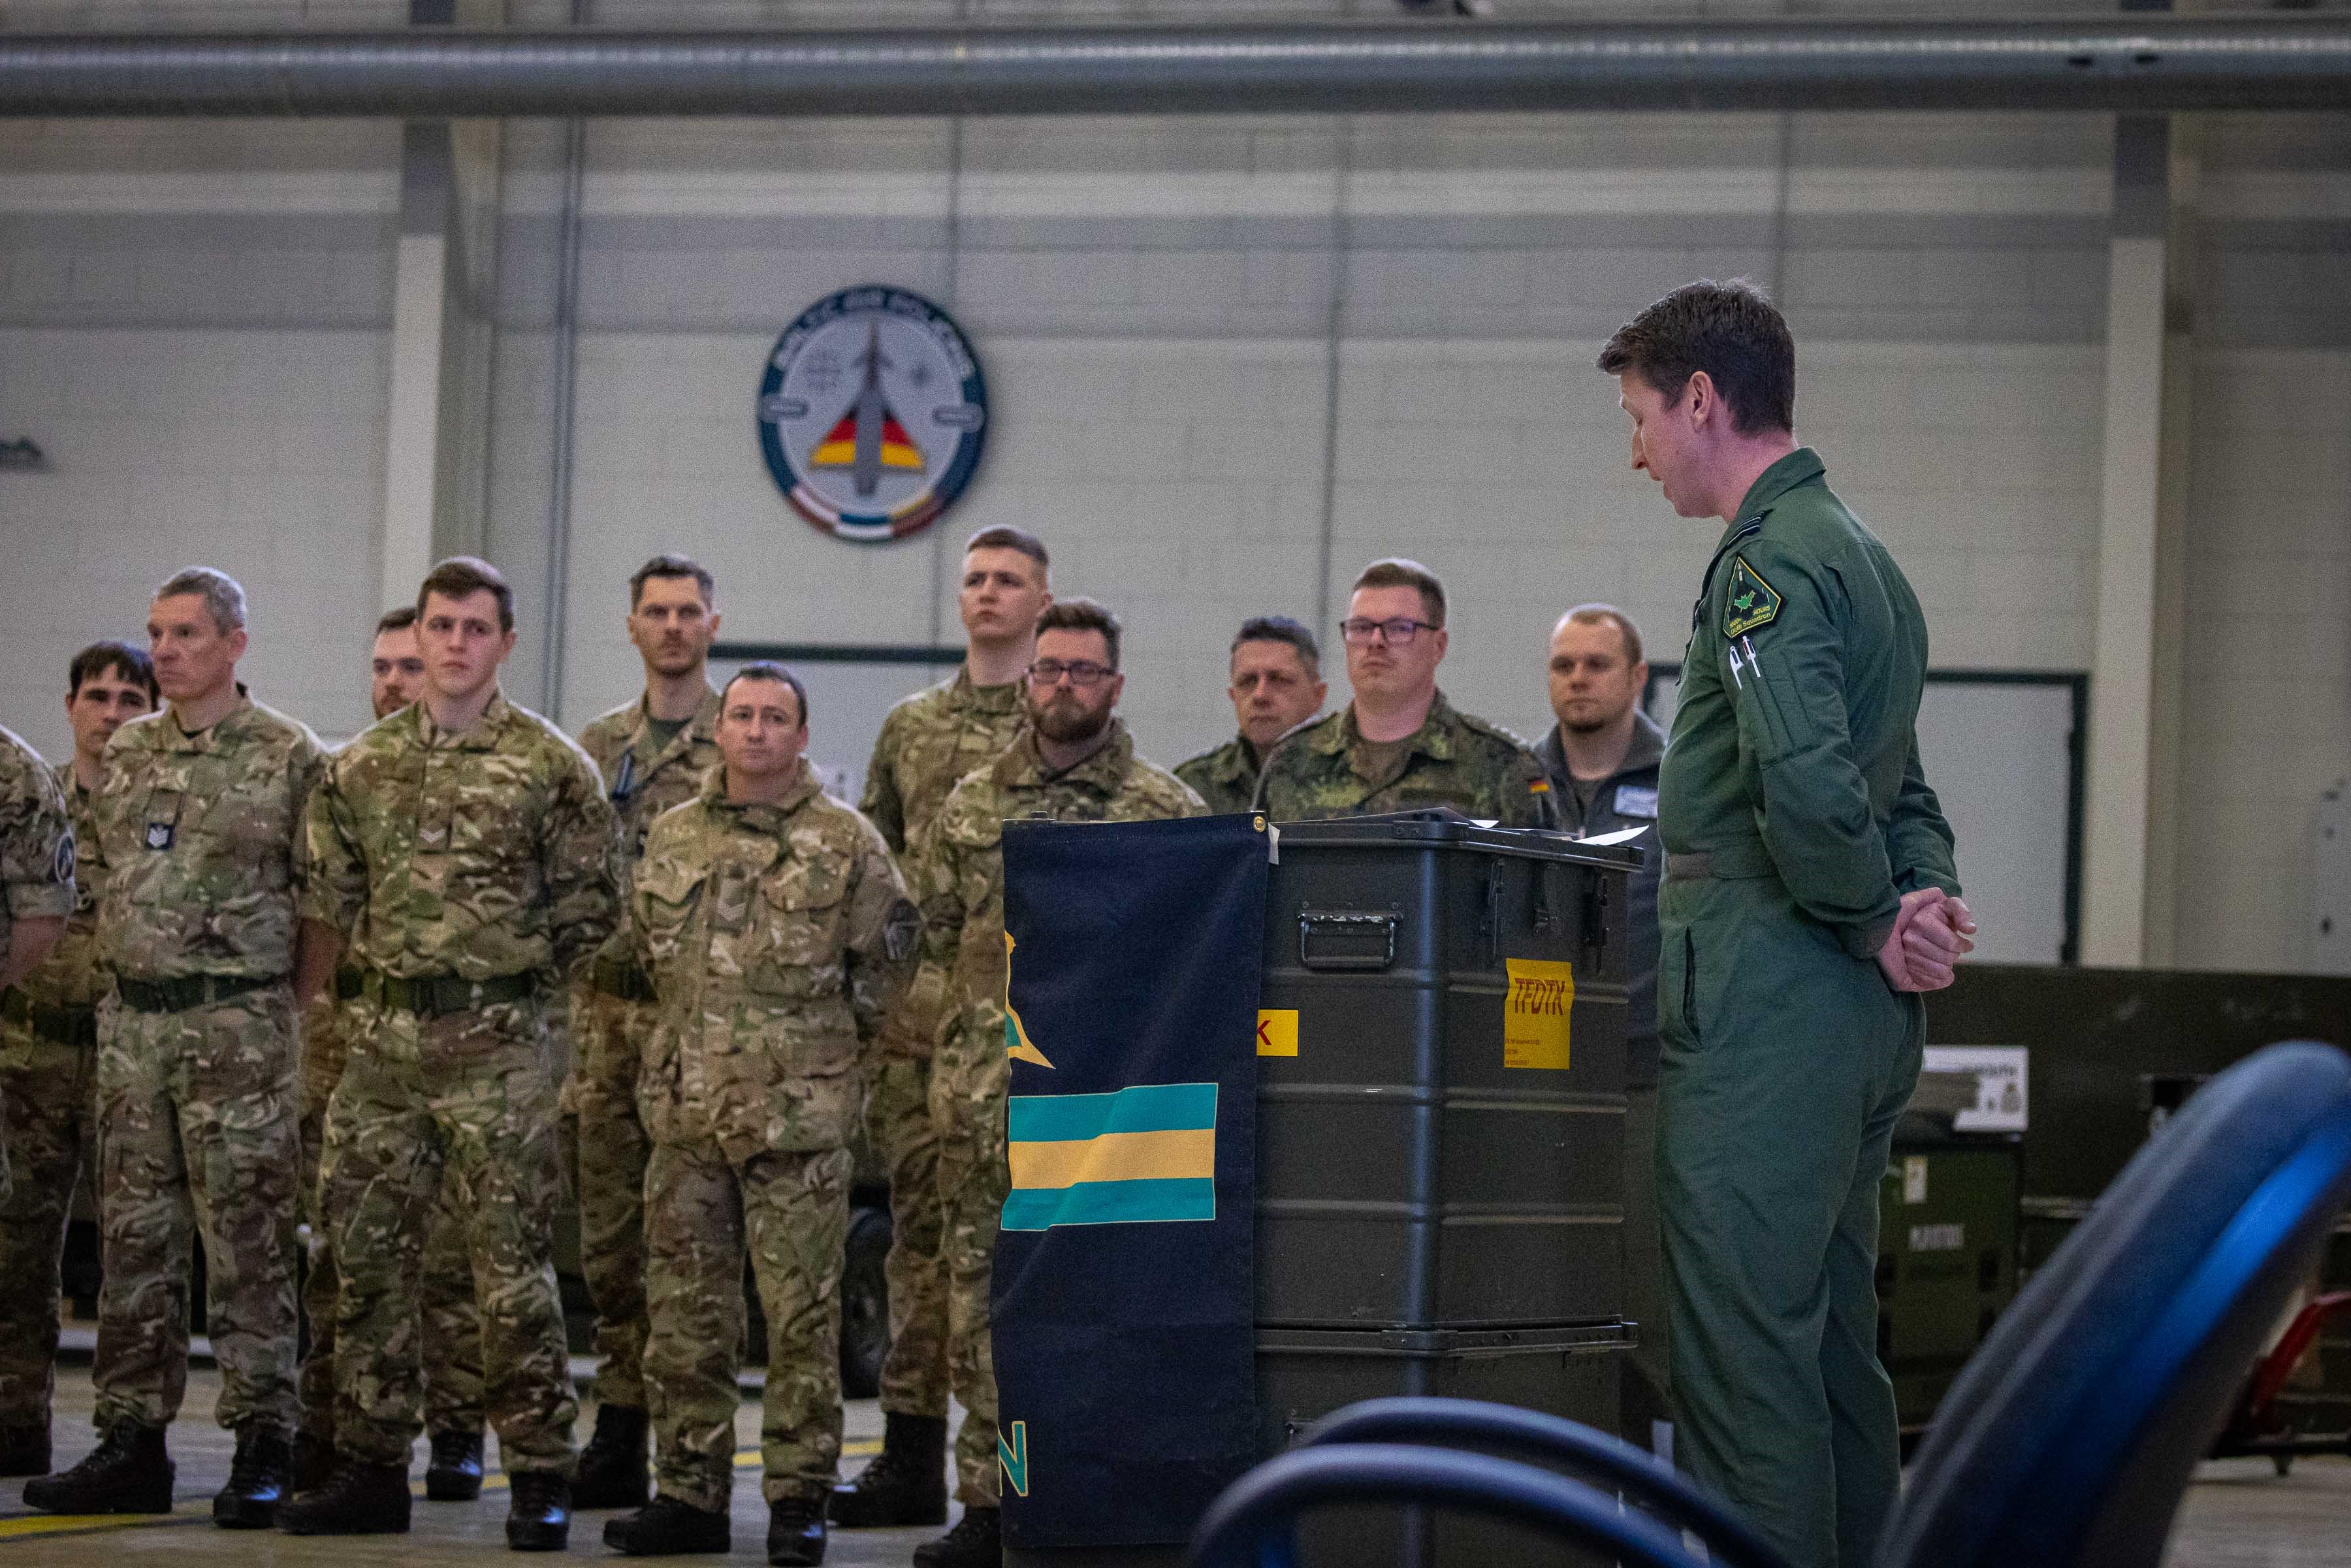 Image shows RAF personnel standing inside hangar.